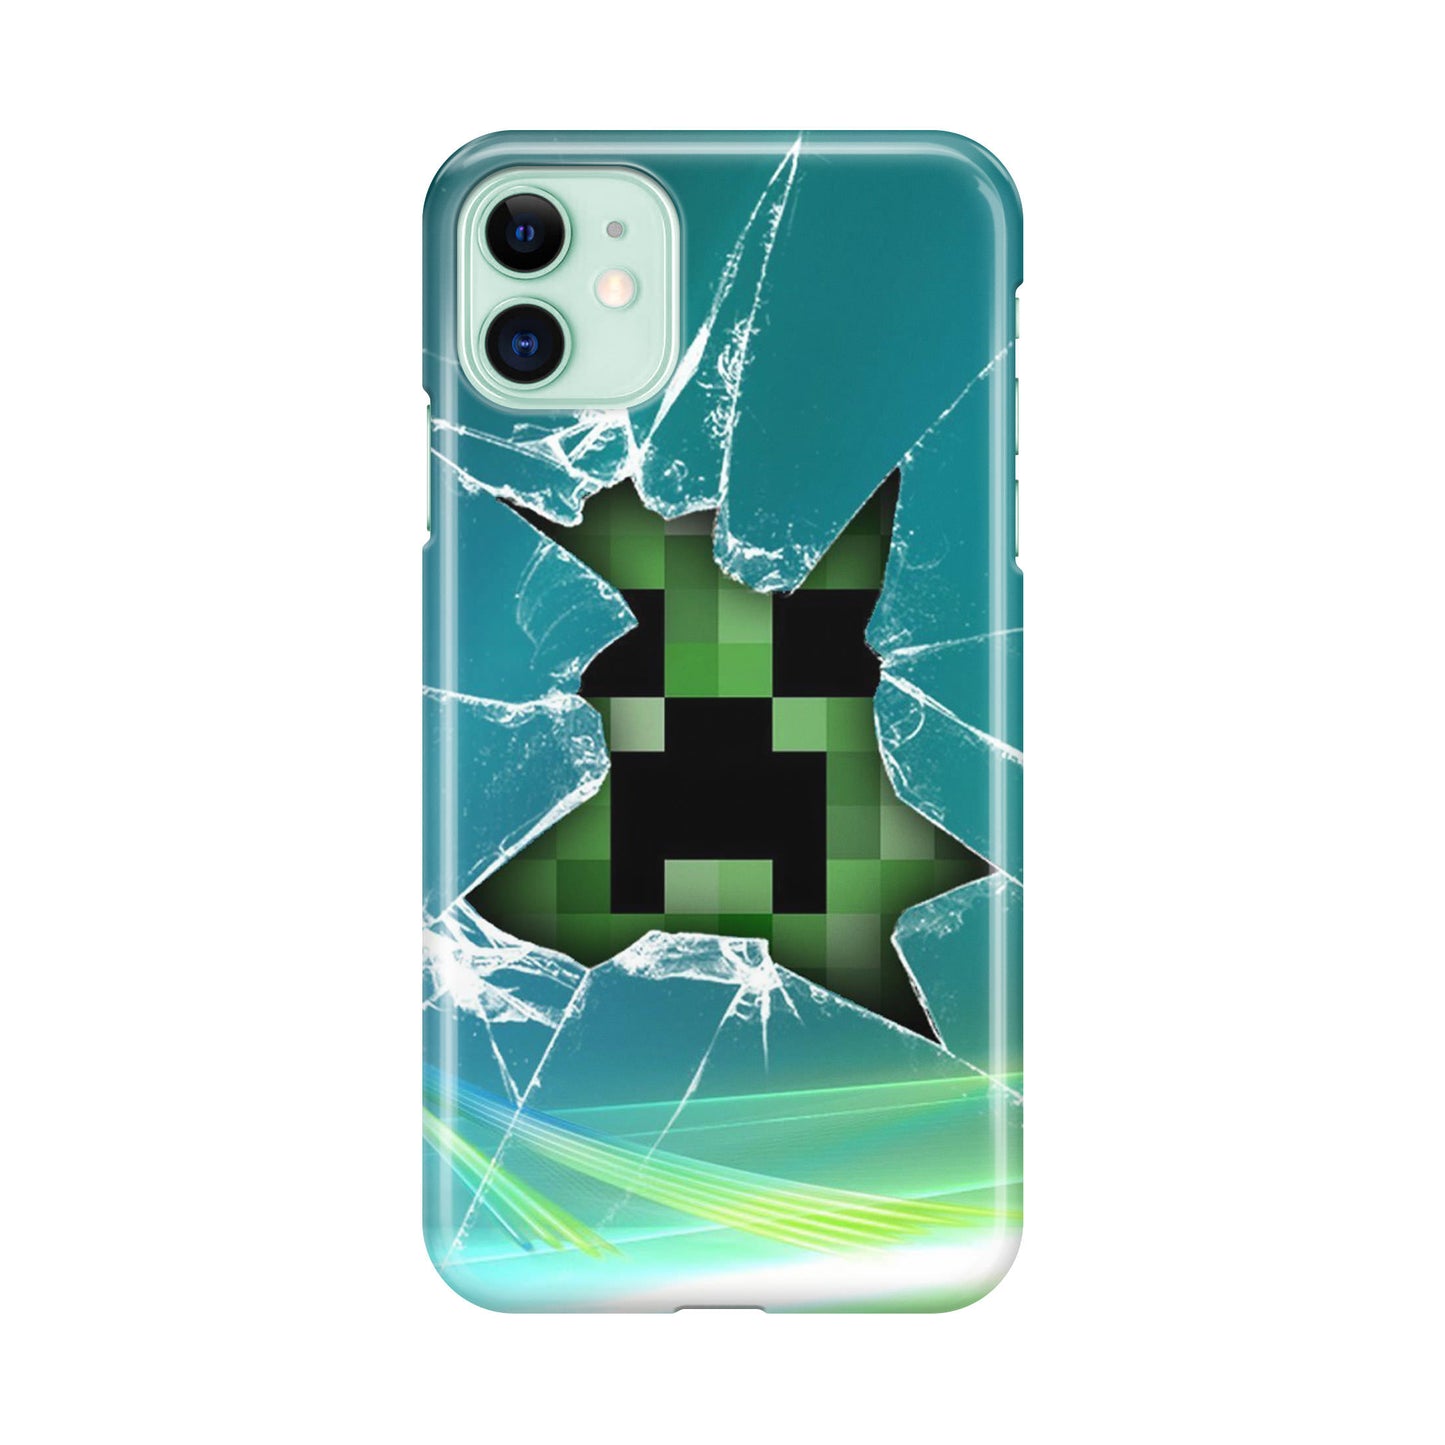 Creeper Glass Broken Green iPhone 12 Case